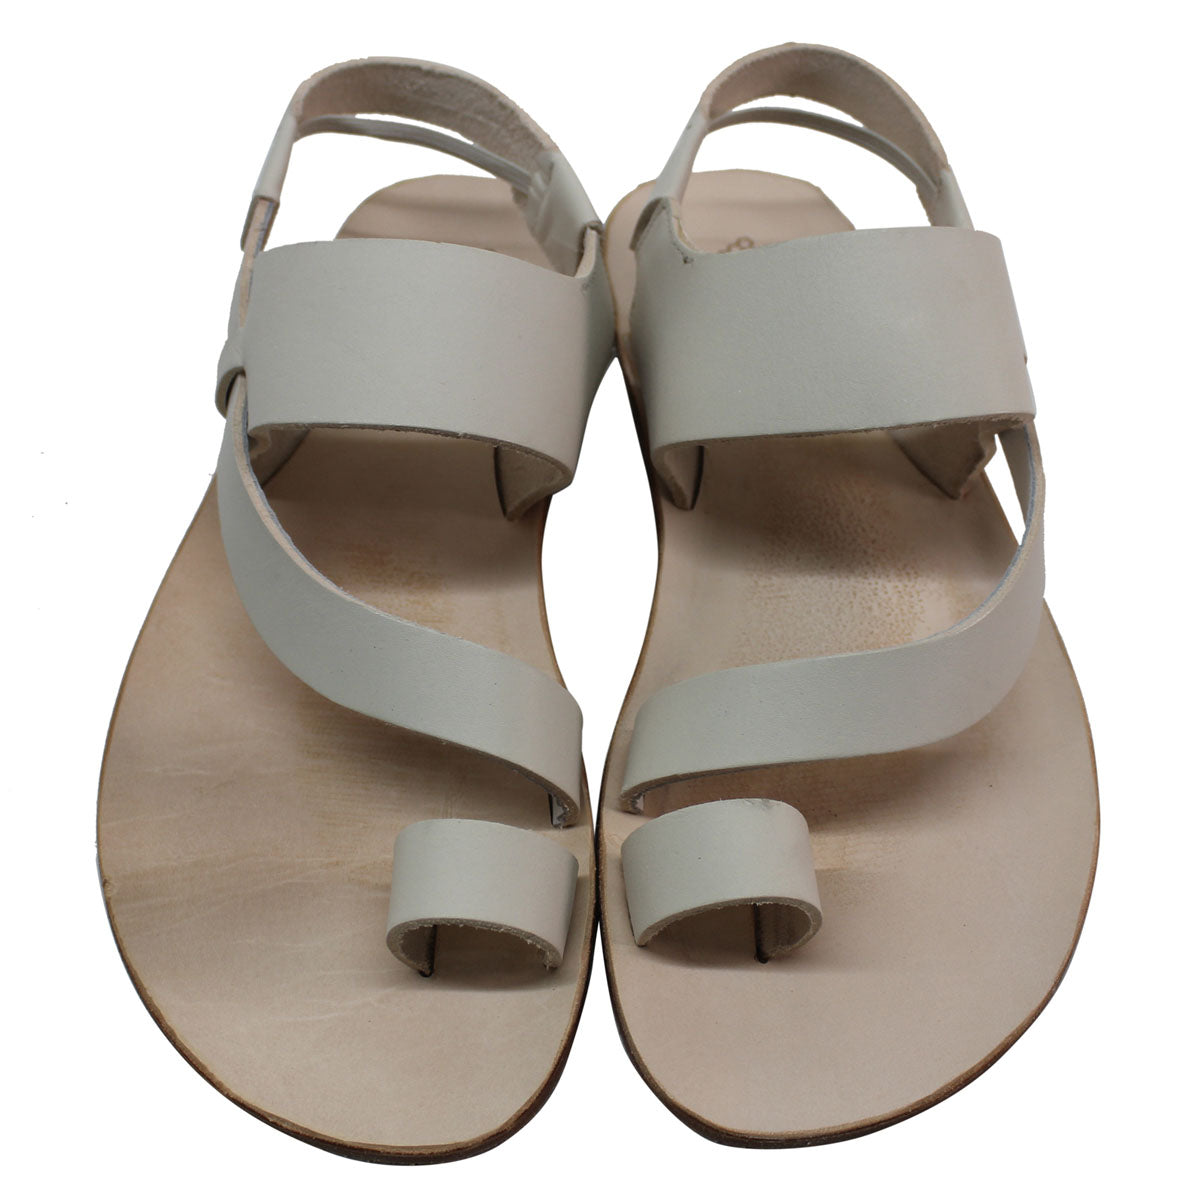 Vivobarefoot Womens Opanka 203225 Leather Sandals - UK 7